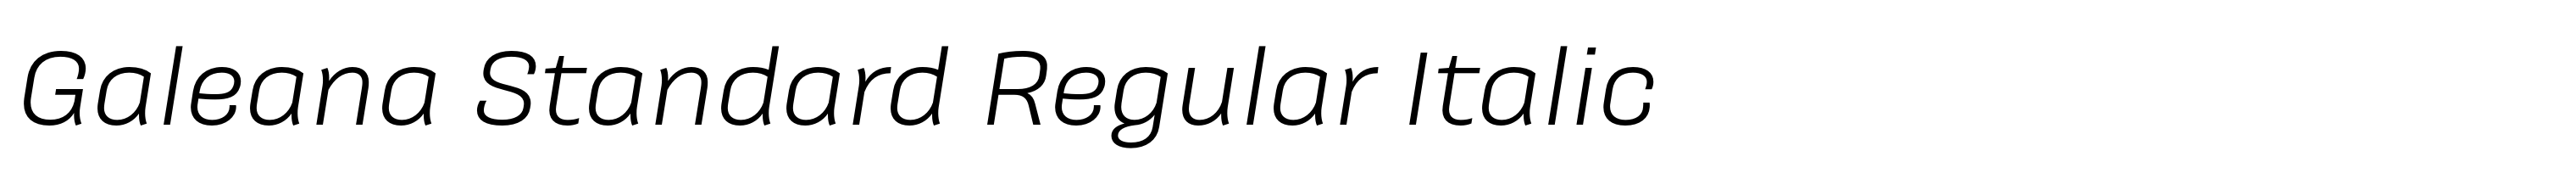 Galeana Standard Regular Italic